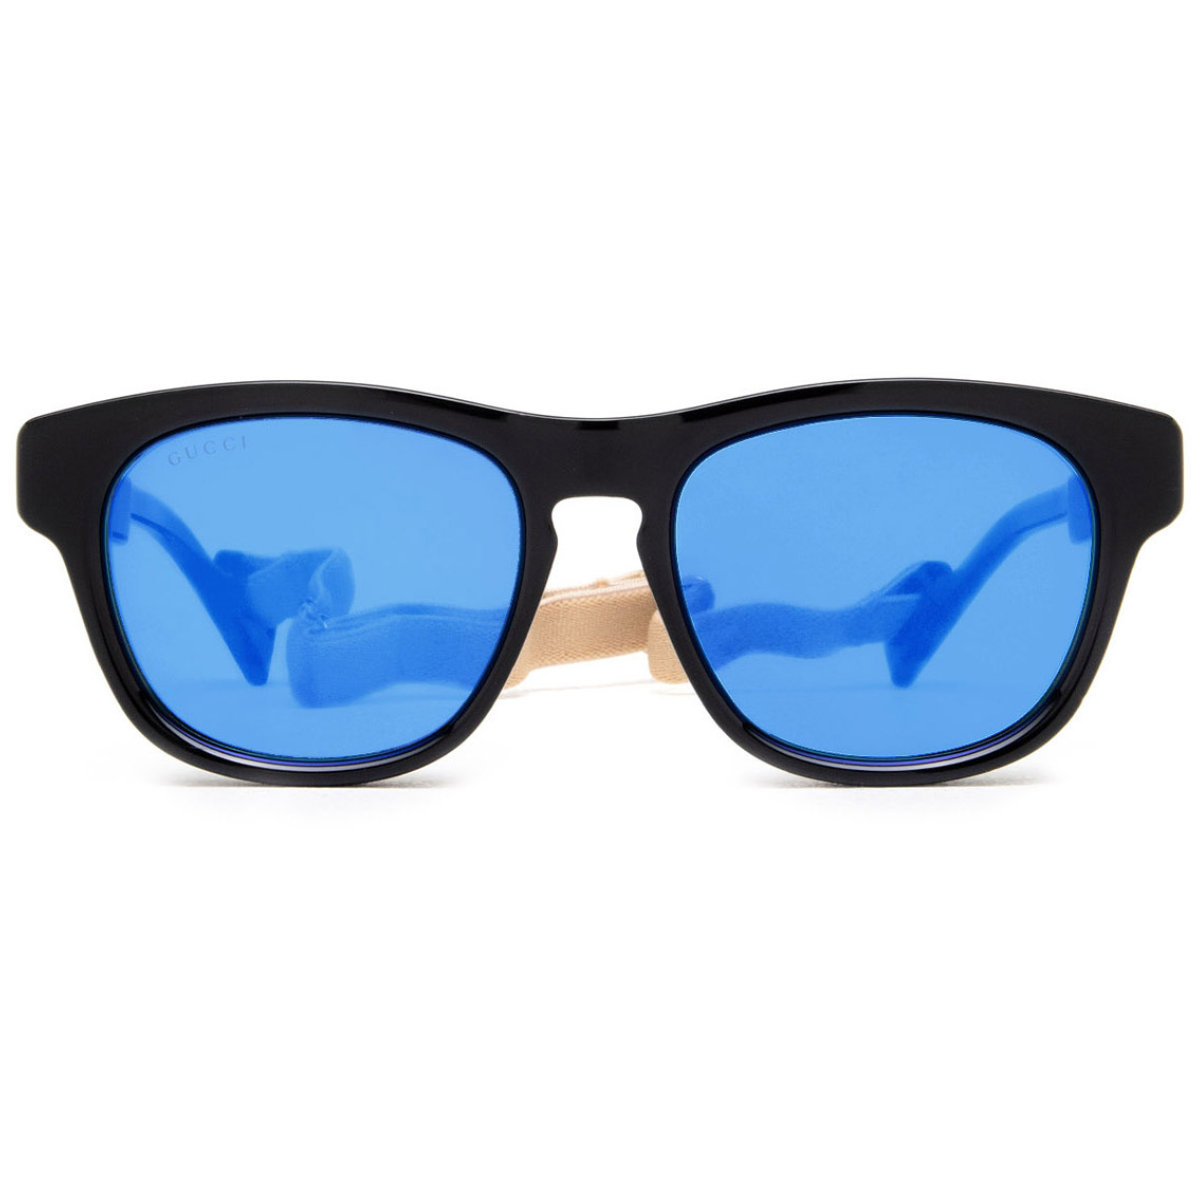 Gucci 1238S Sunglasses: Stylish Eyewear for Men and Women